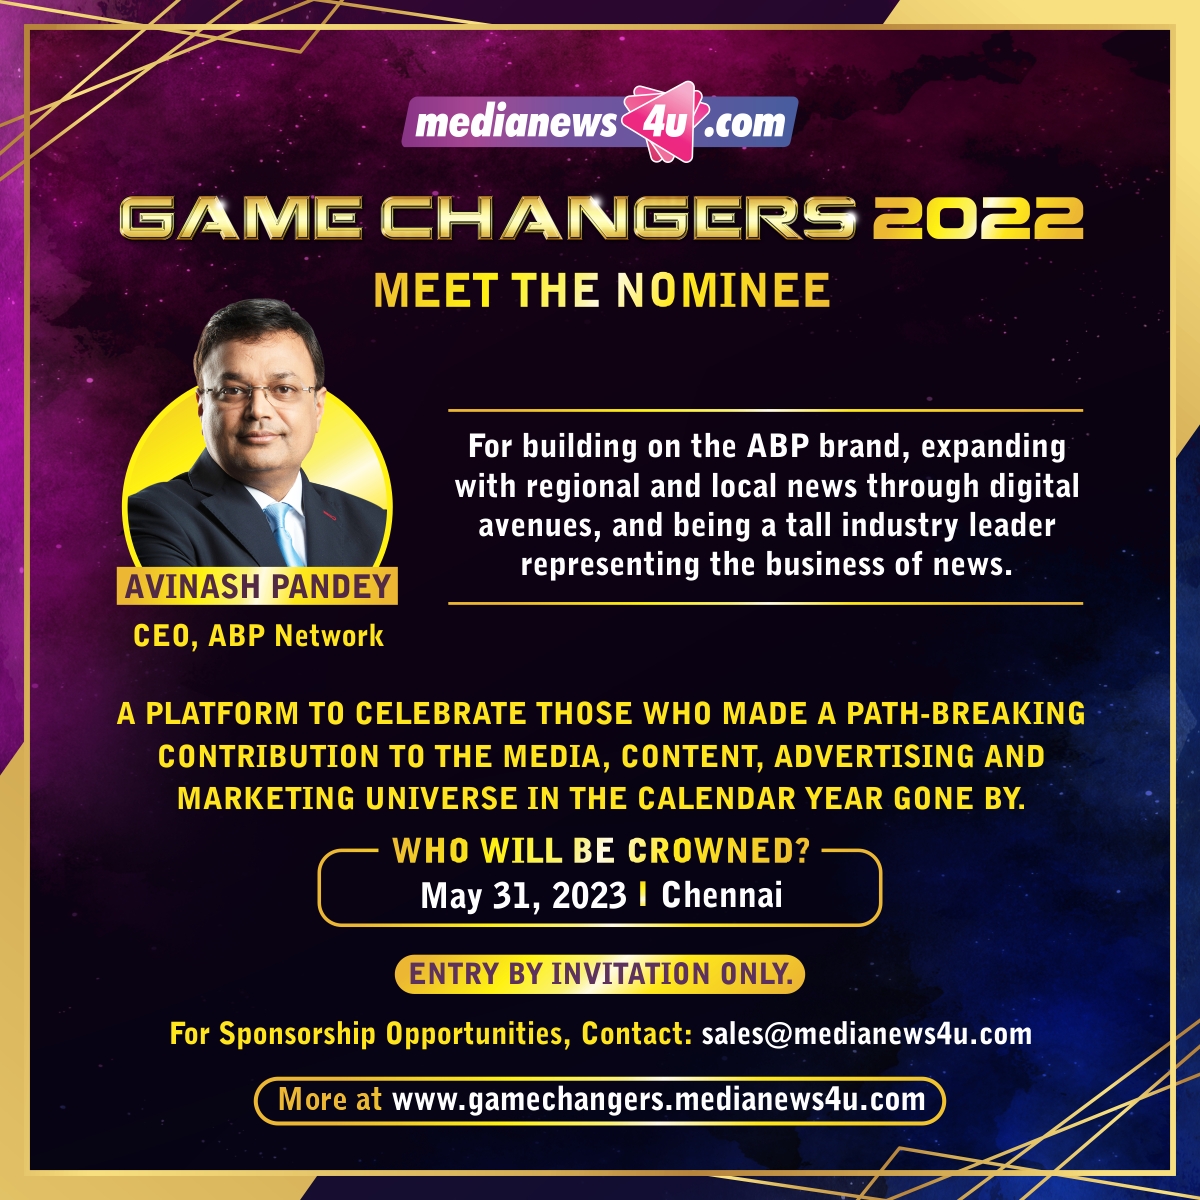 #GameChangers2022: Meet the nominee - @panavi, ABP Network.
Link to Register: bit.ly/3KWcYvk
@abplive @ABPNews @abpmajhatv @abpanandatv @abpasmitatv #AvinashPandey #ABPNetwork
@Umanathv @thenemoh @Smitha_Coolbird